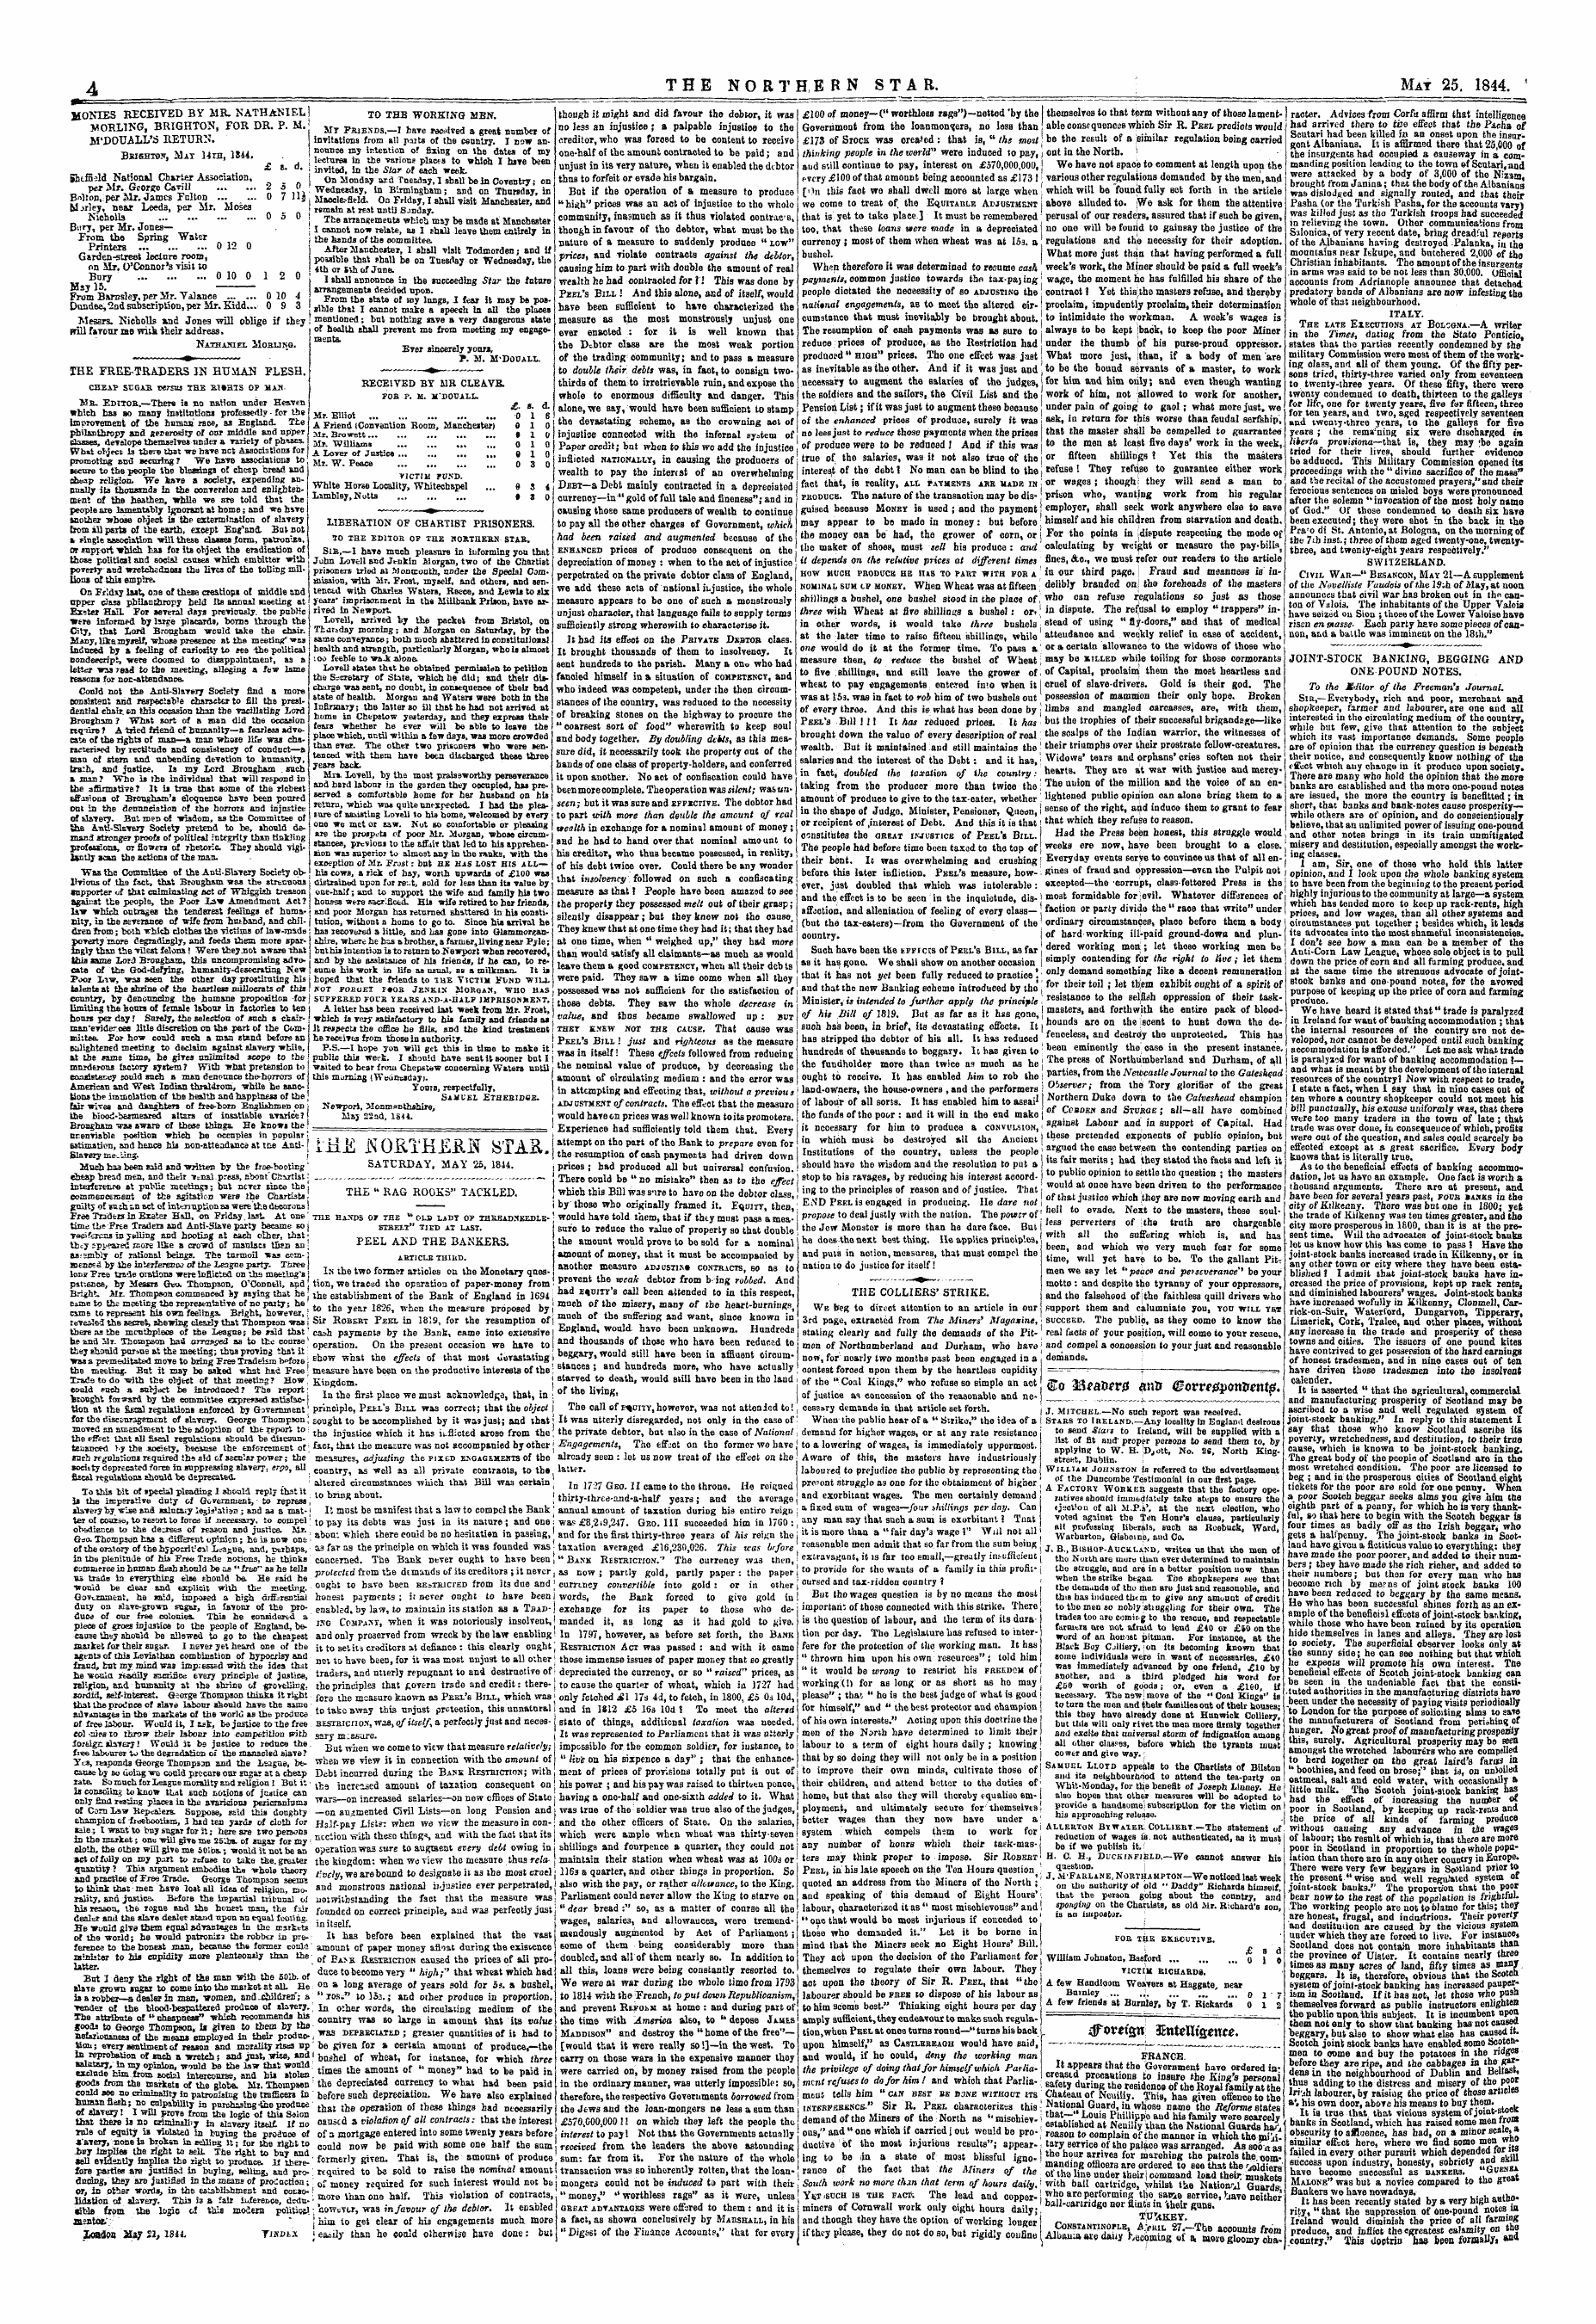 Northern Star (1837-1852): jS F Y, 1st edition - Ihe Tfo&Thjsah Star Saturday, May 25, 18...